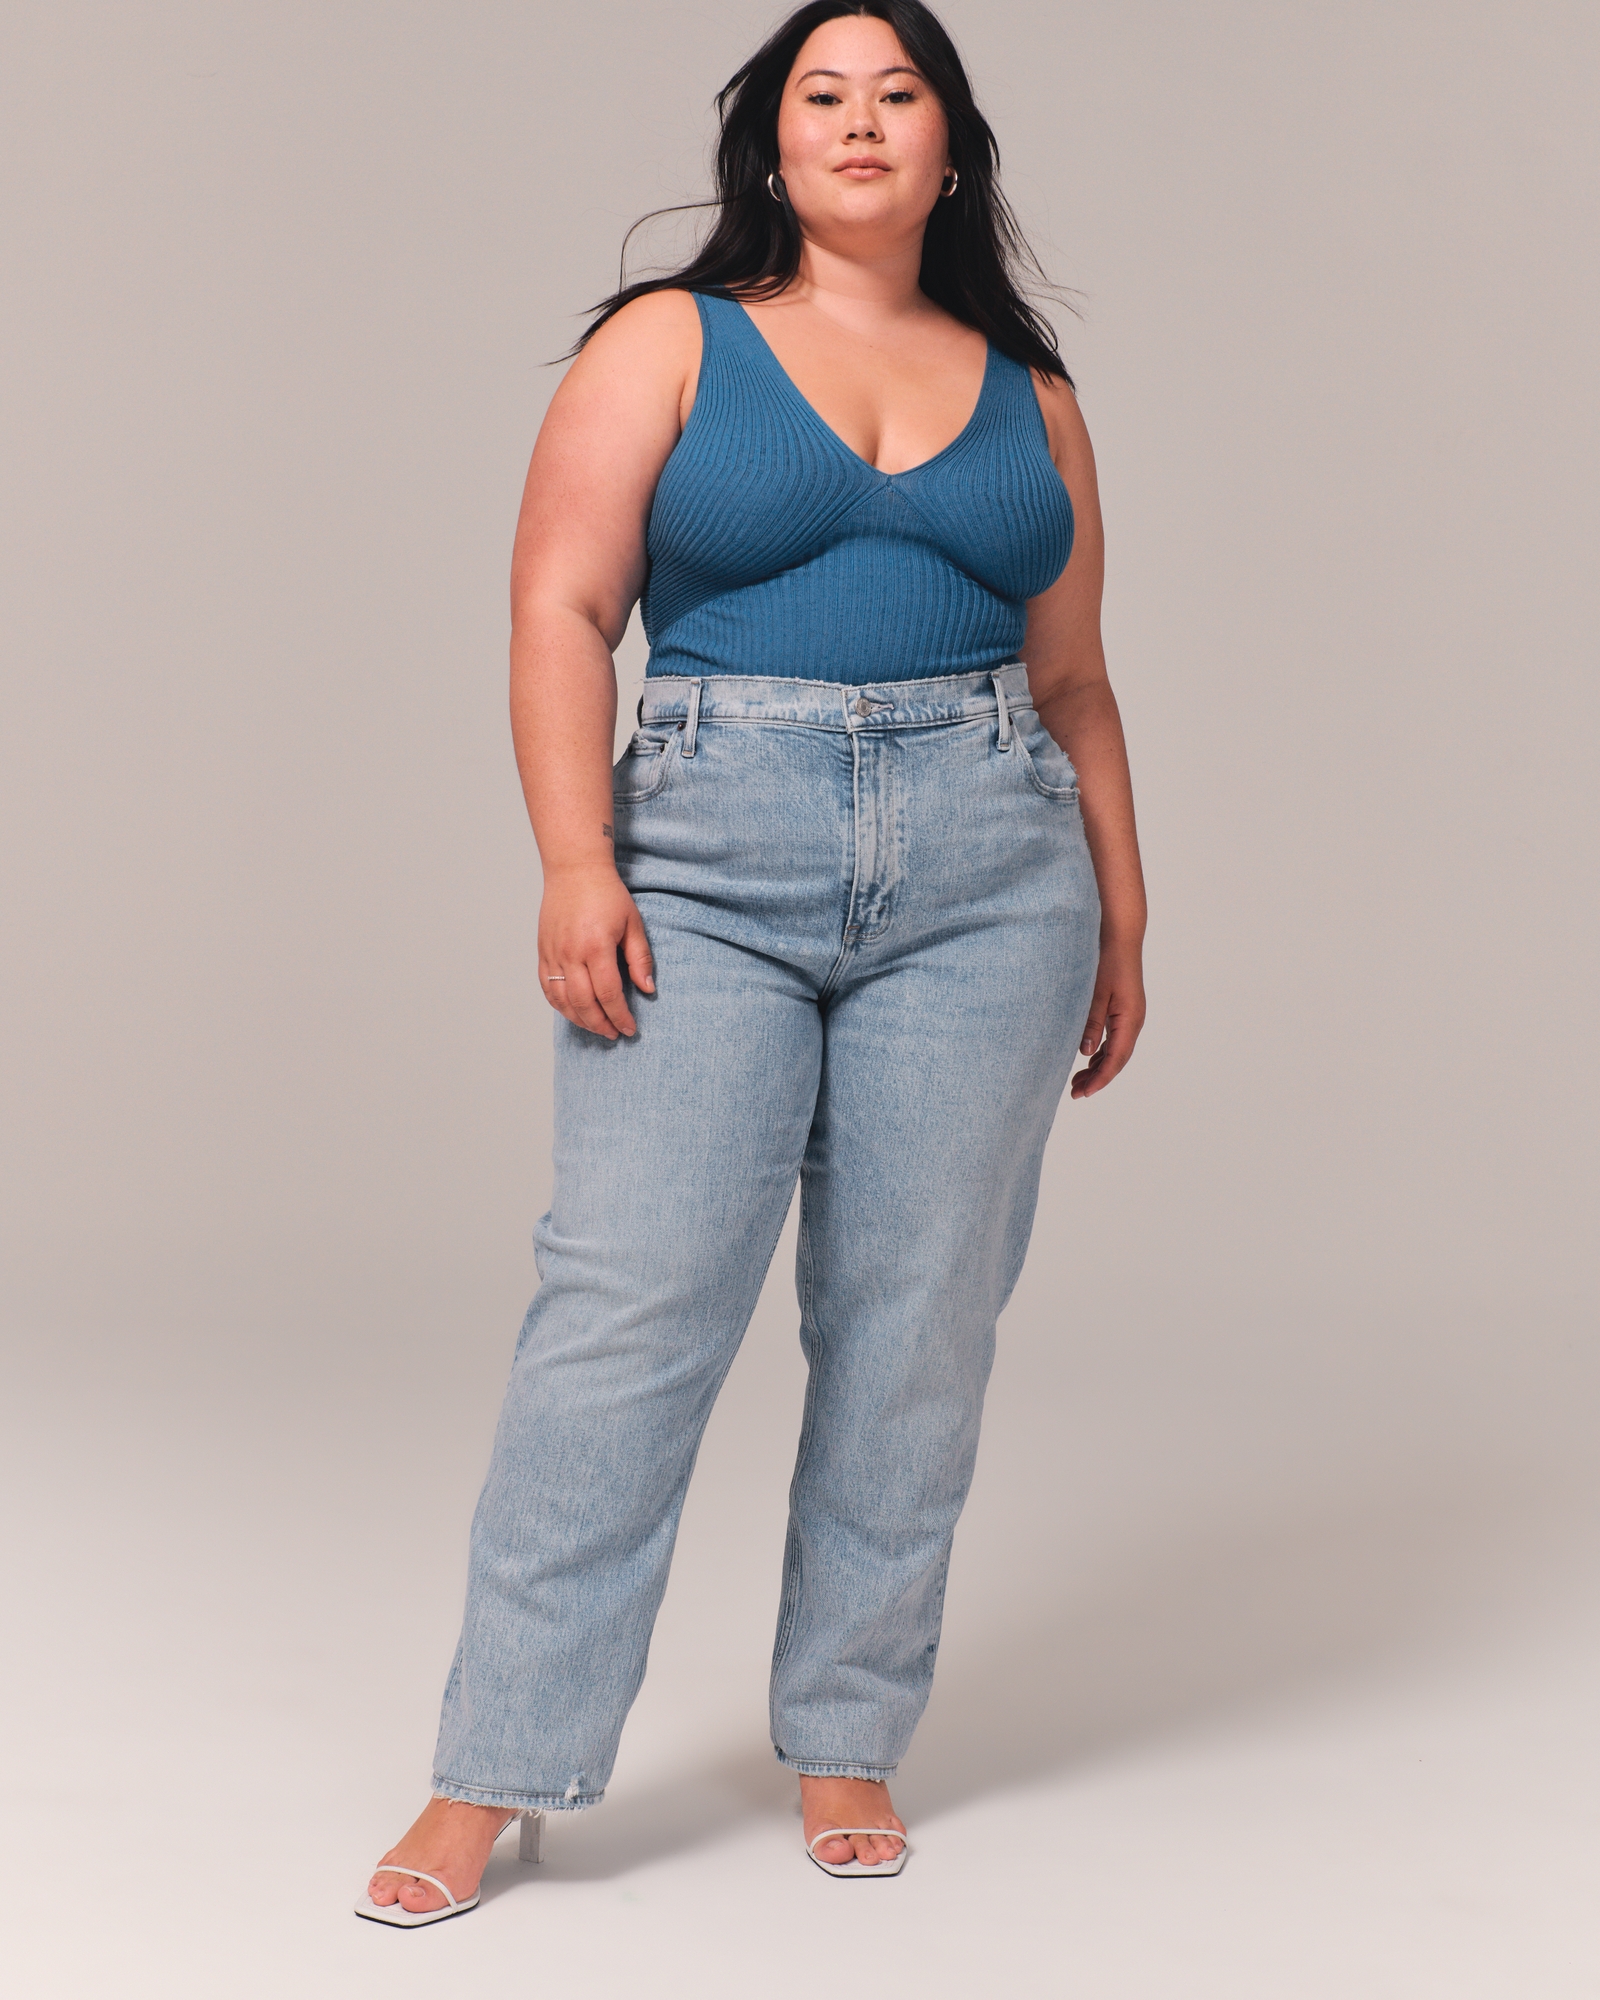 Skims bodysuit + Abercrombie 90s curve love jeans 🤝 #skims